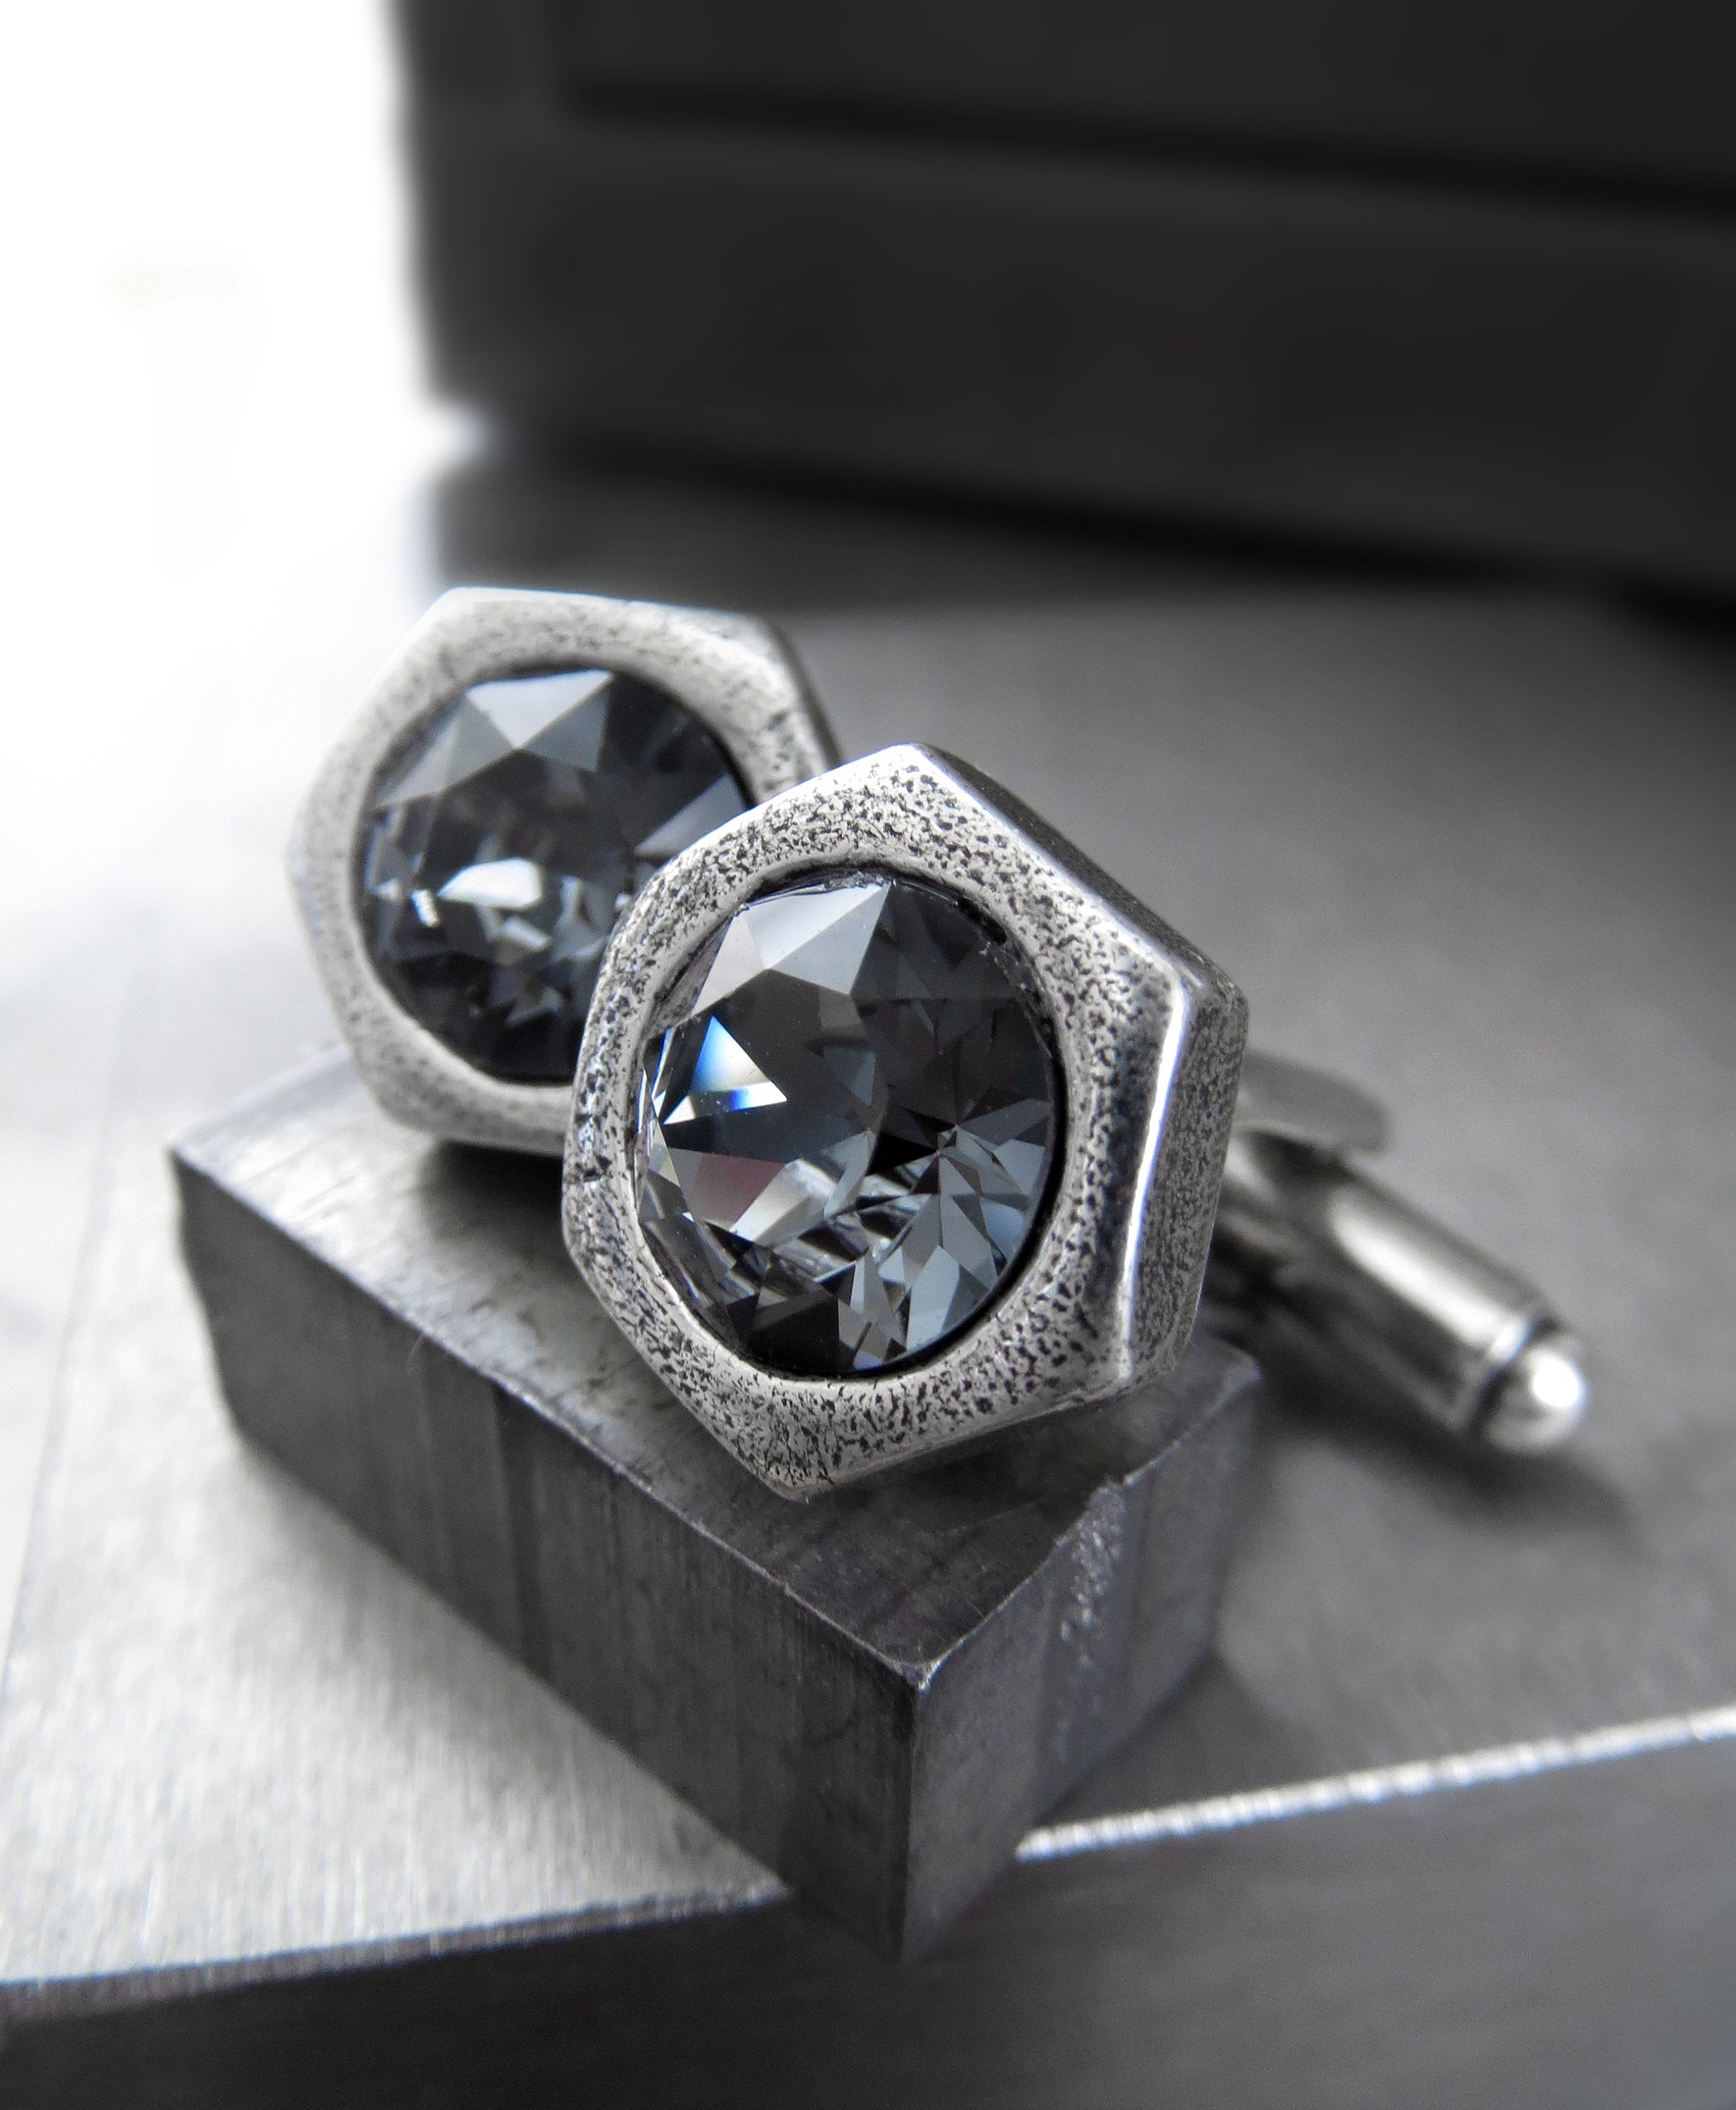 Hex Nut Cufflinks with Dark Grey Crystal - Antiqued Silver